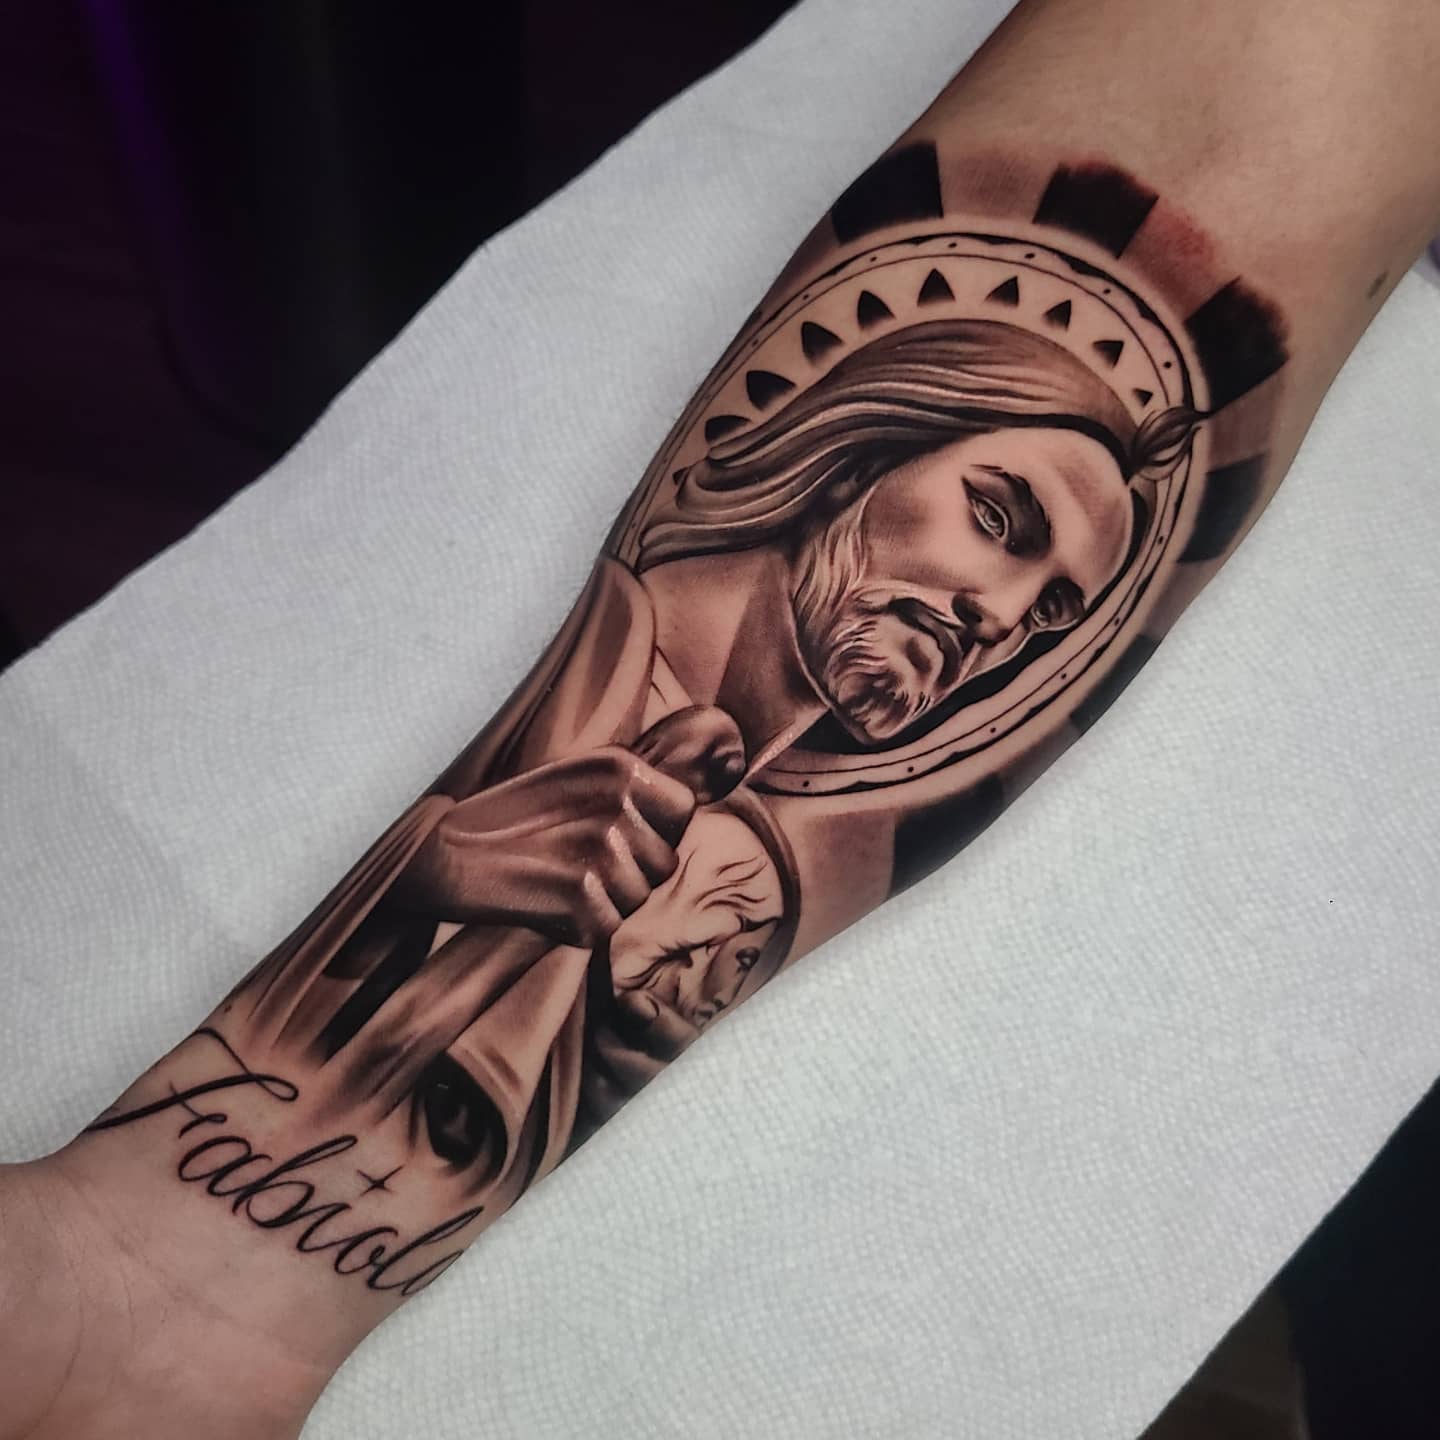 Tattoo uploaded by juandealondra051617  Tattos San Judas tadeo  Tattoodo